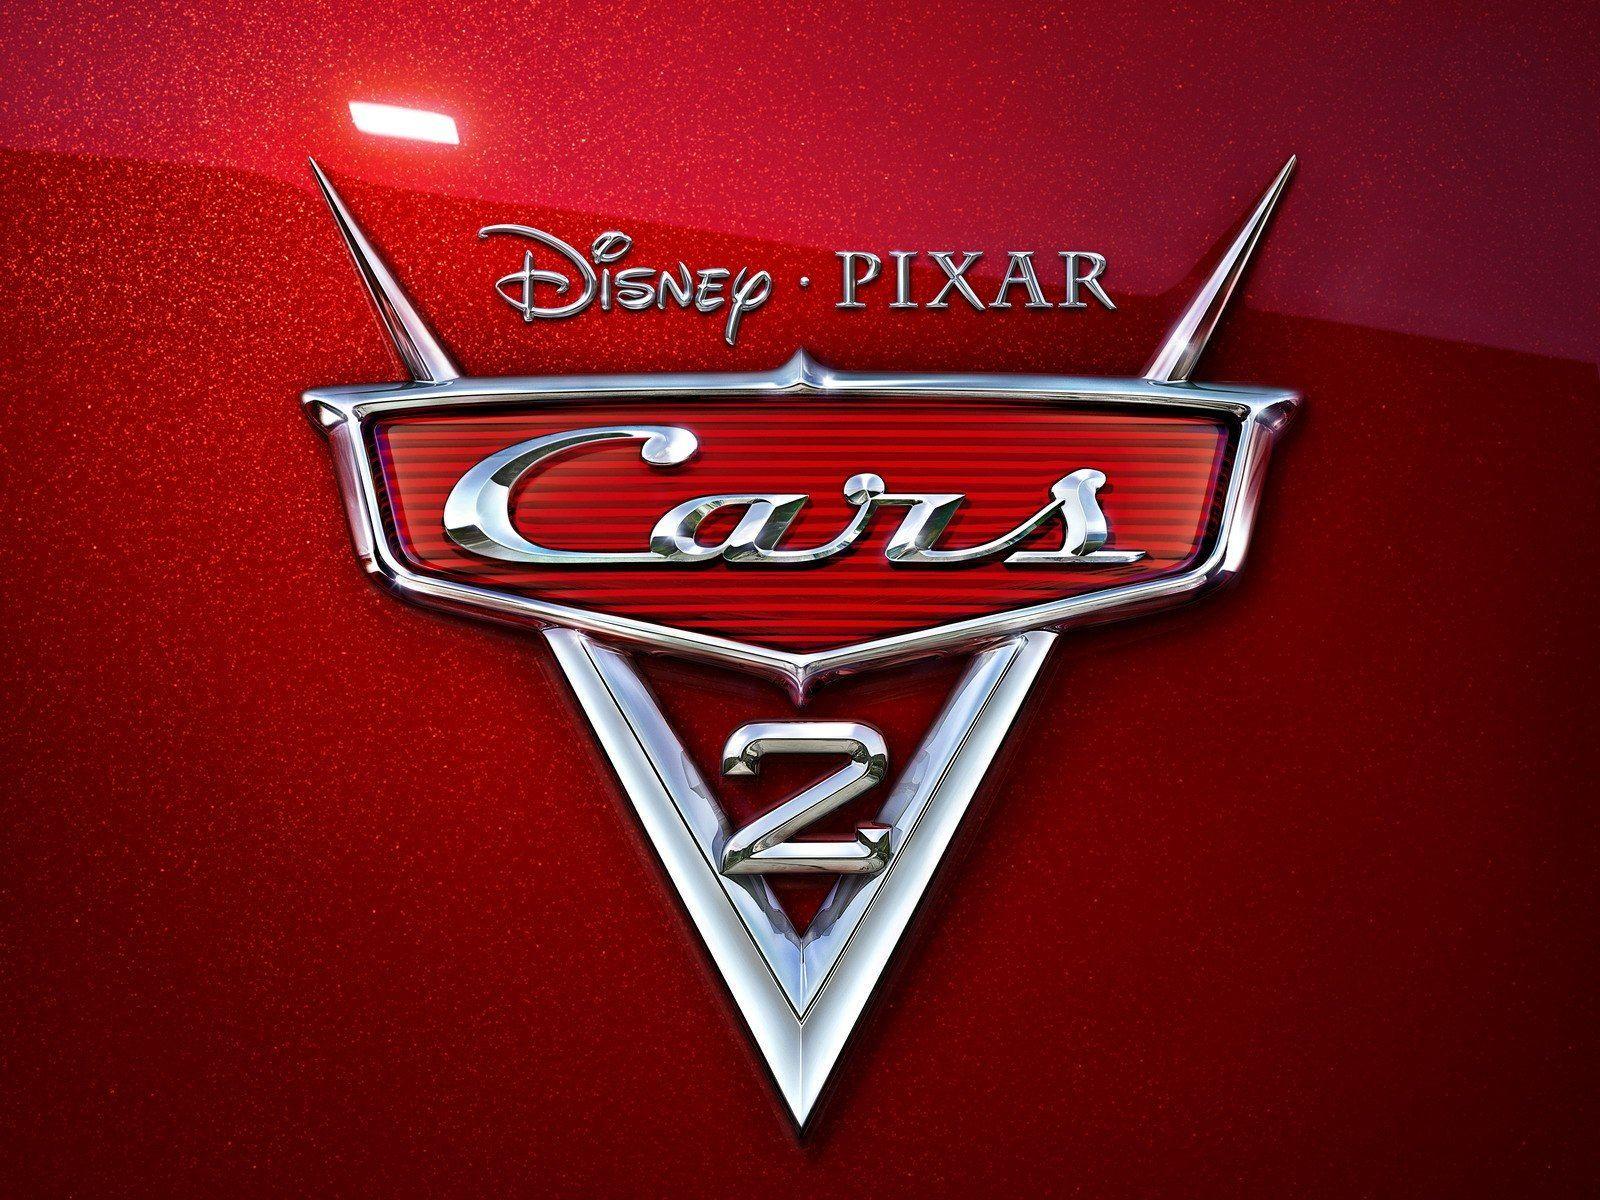 2 Disney Pixar Logo - Cars 2 Movie Disney Pixar Logos Wallpaper For iPhone. Cosas para